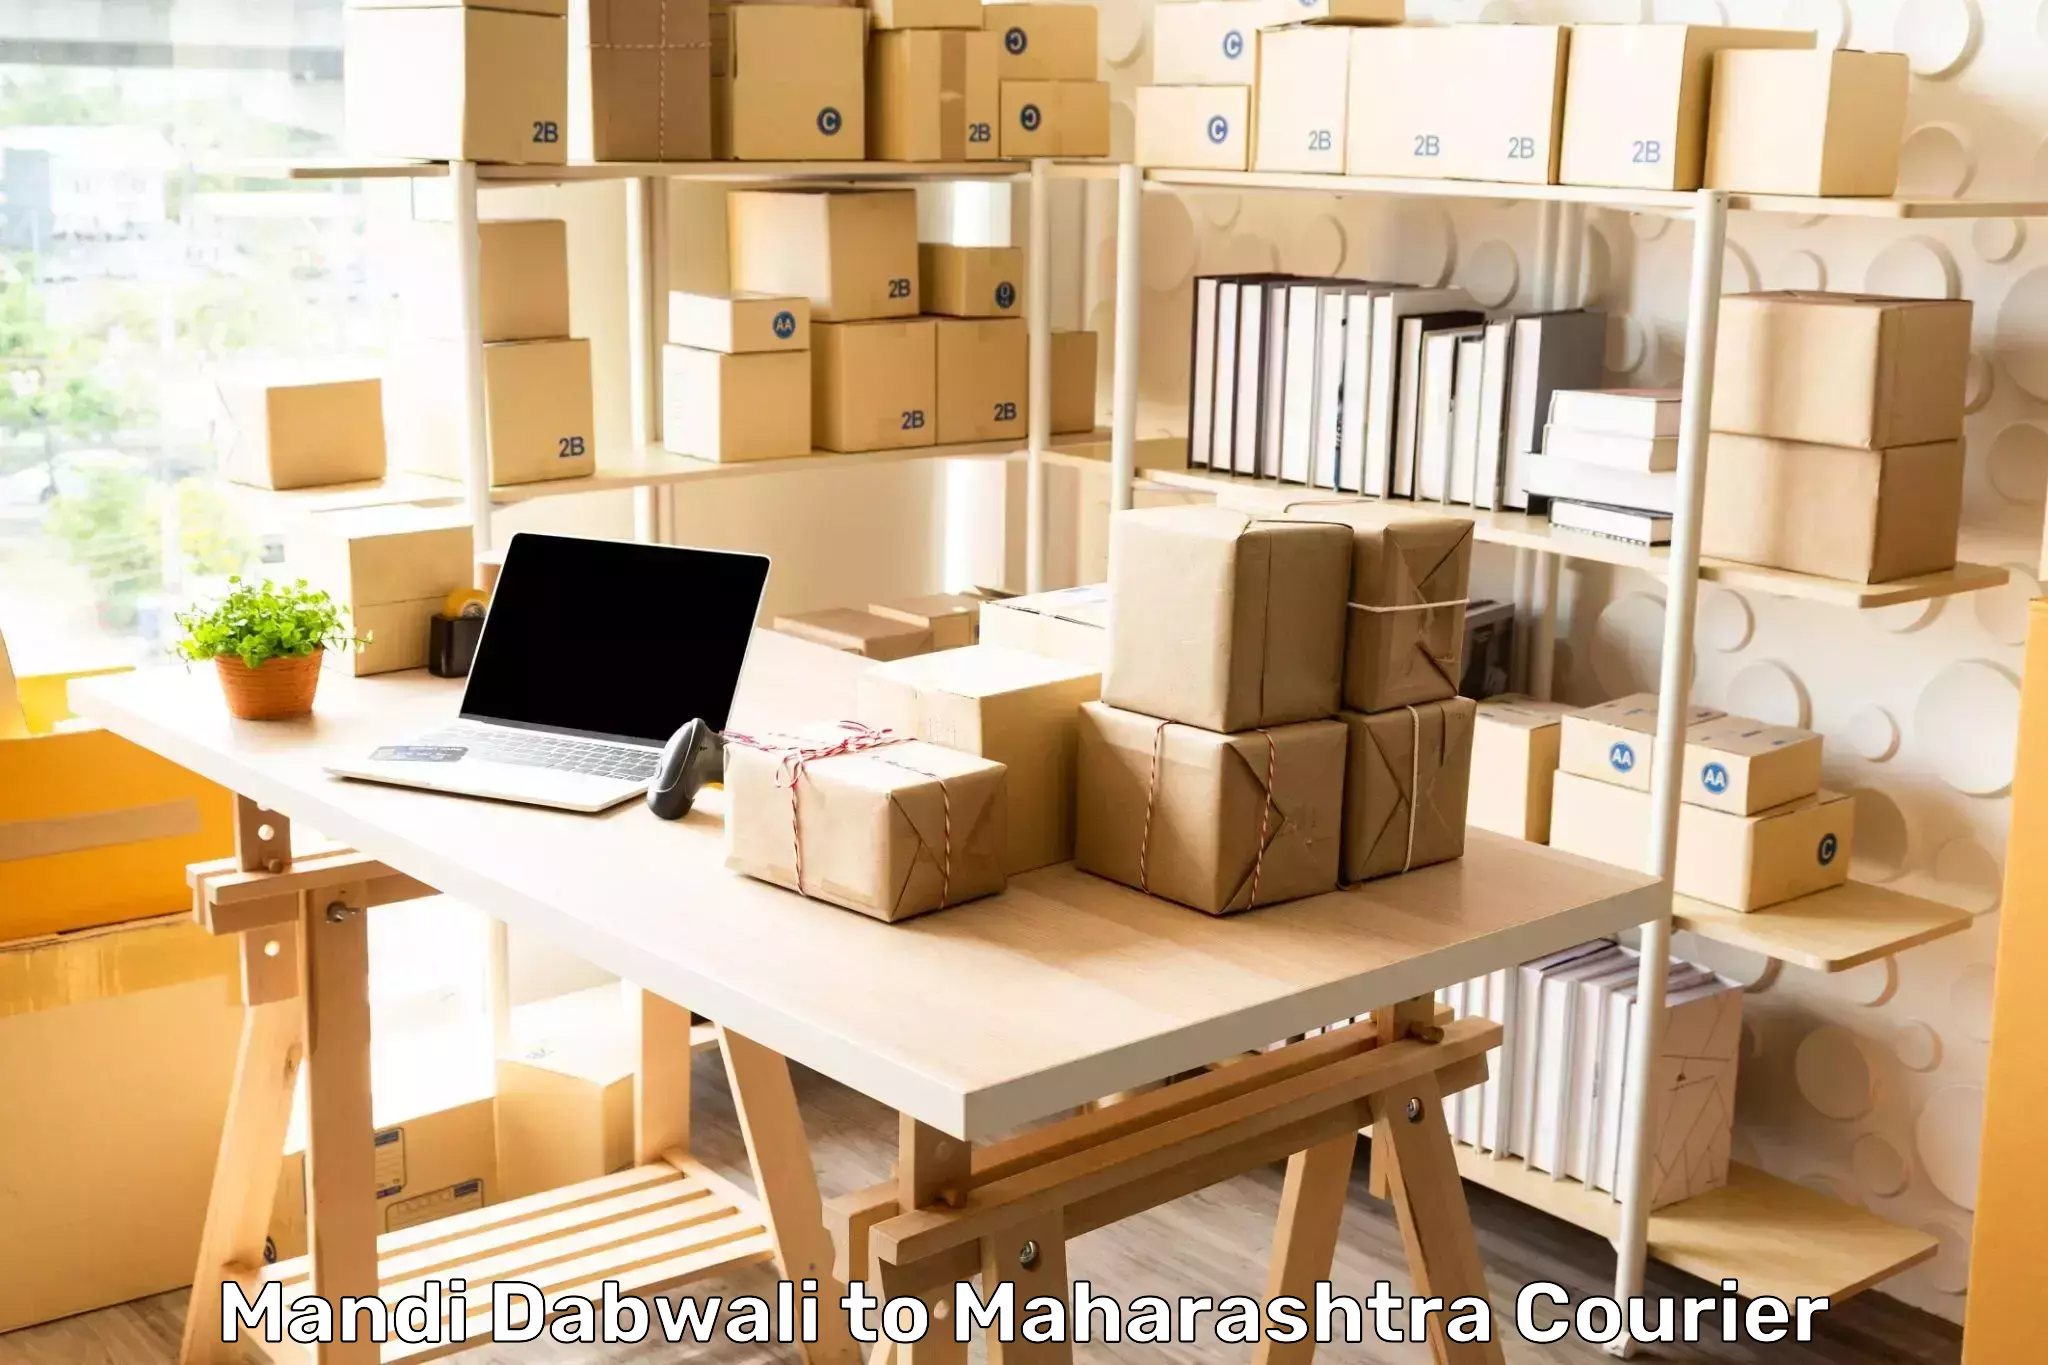 Custom courier packaging Mandi Dabwali to Maharashtra